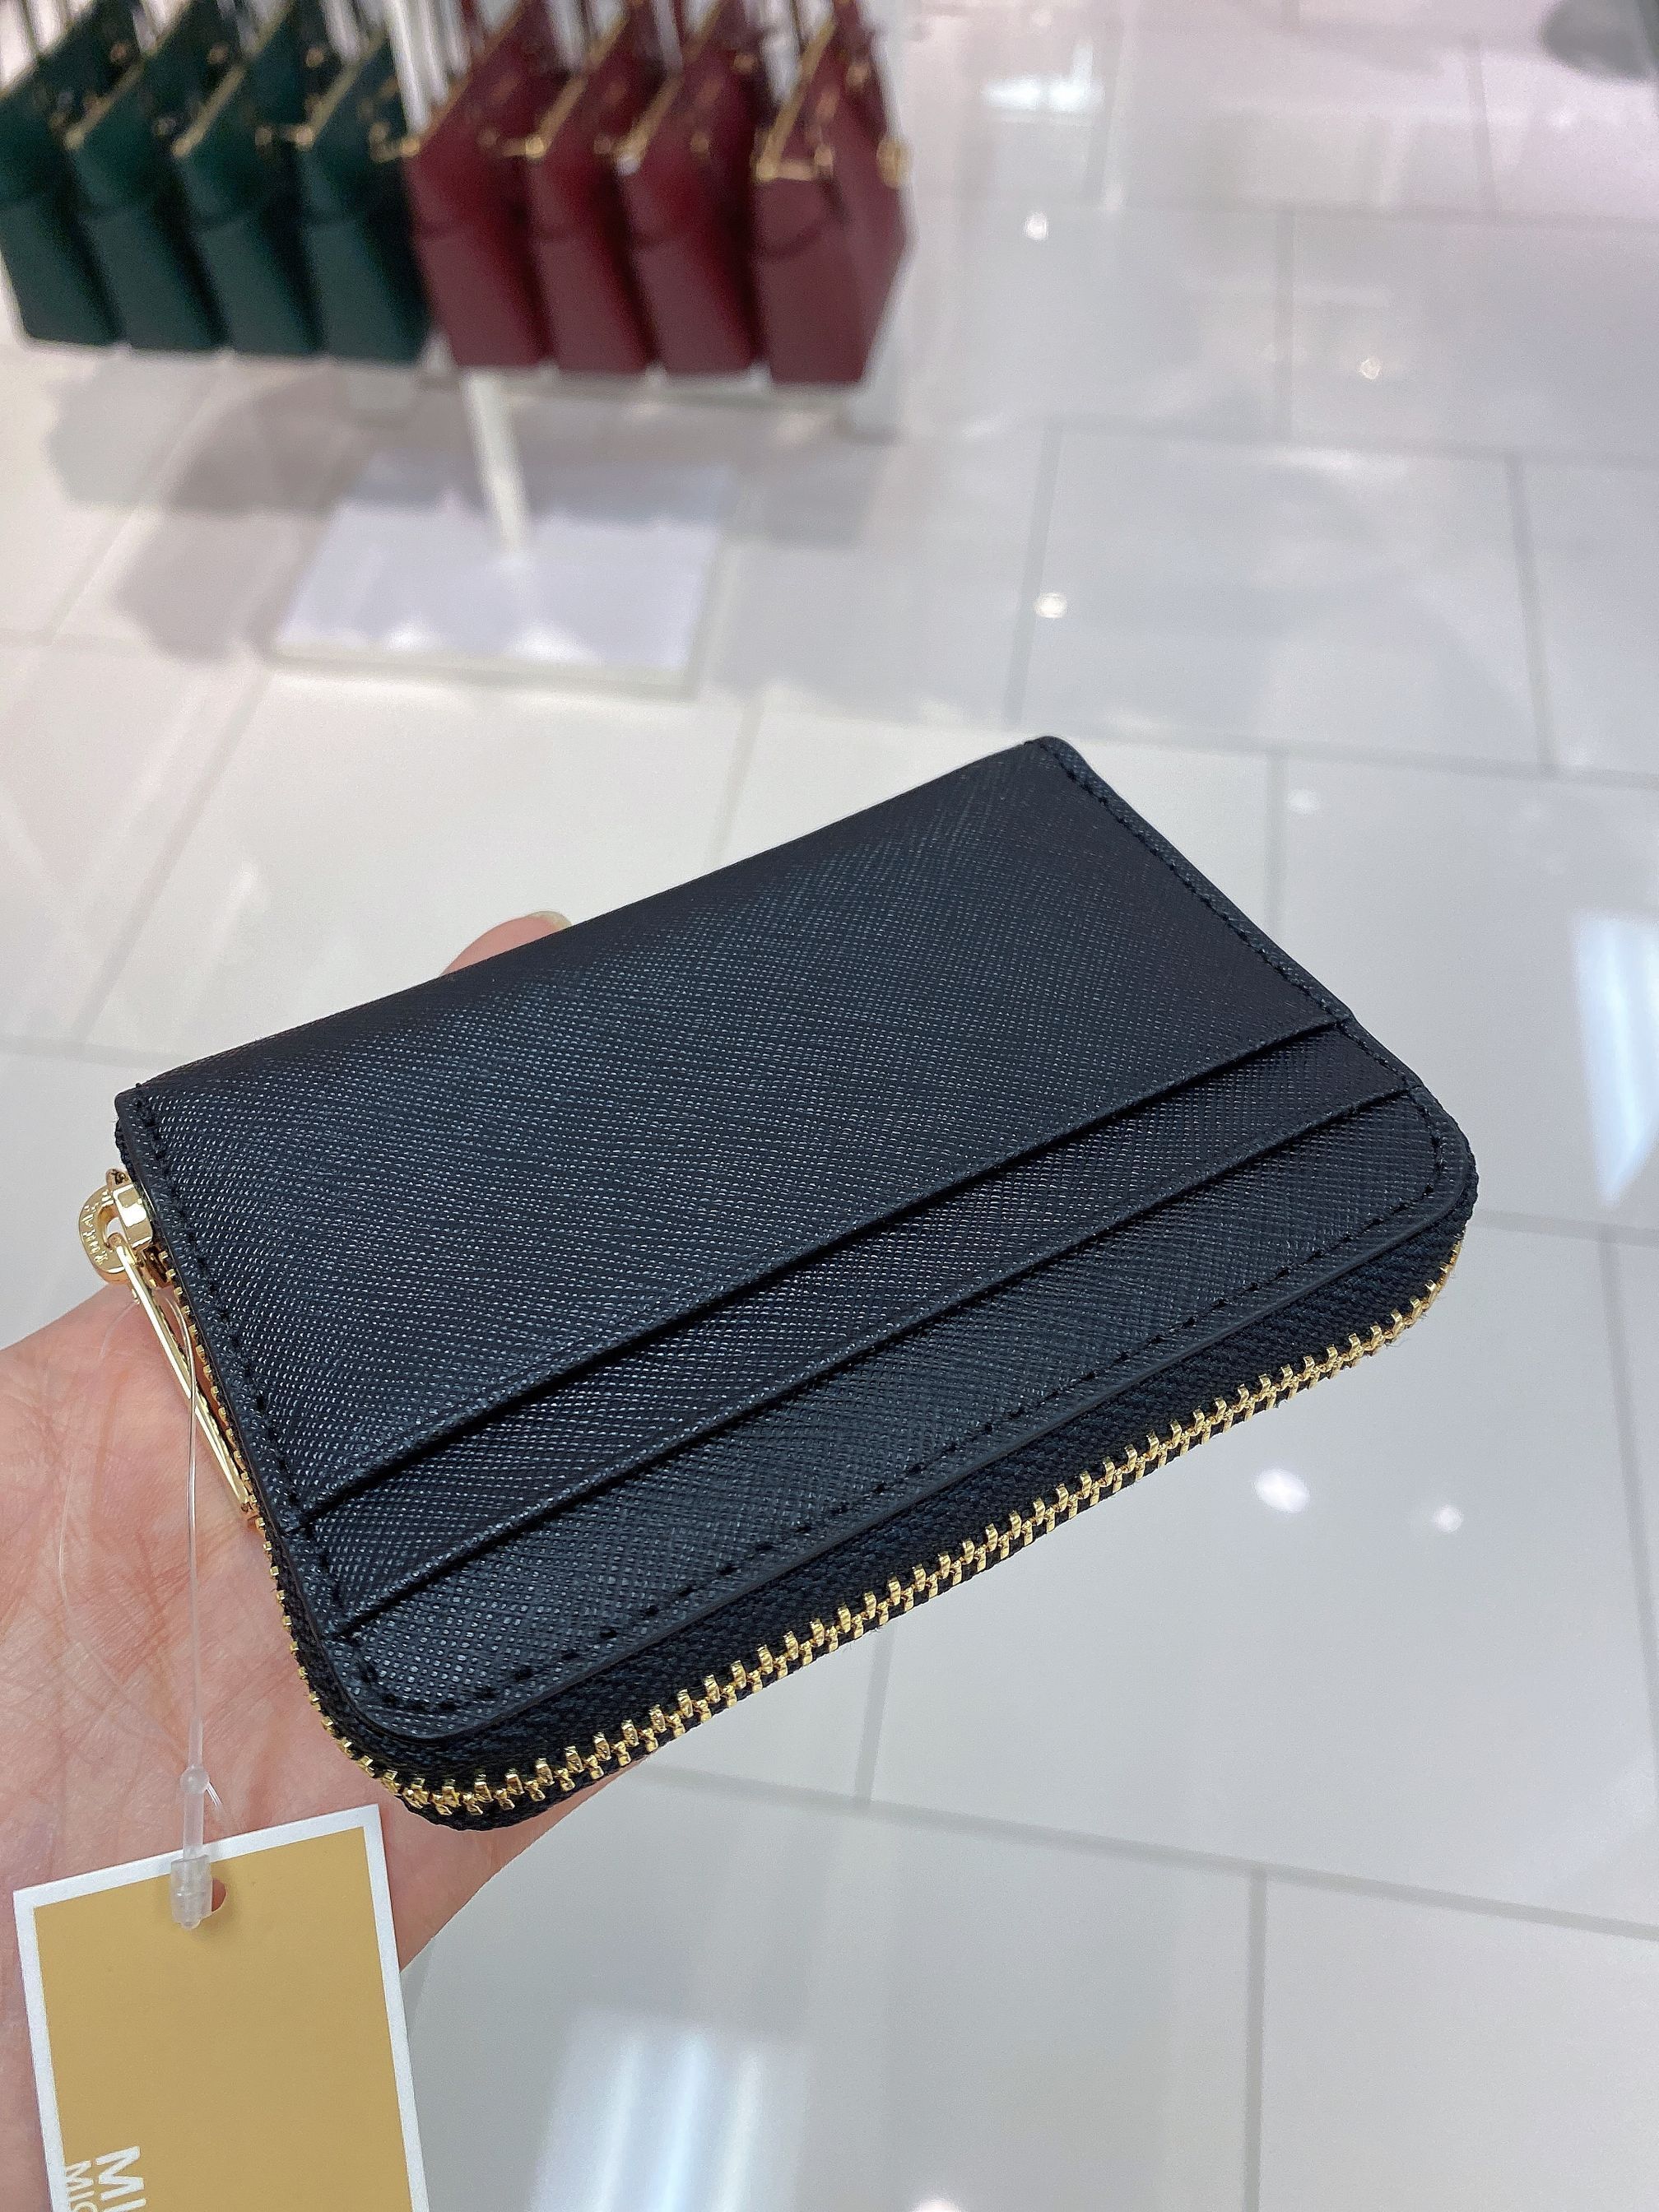 MICHAEL KORS Jet Set Medium Zip Around Leather Card Case Wallet Black Gold - image 3 of 3